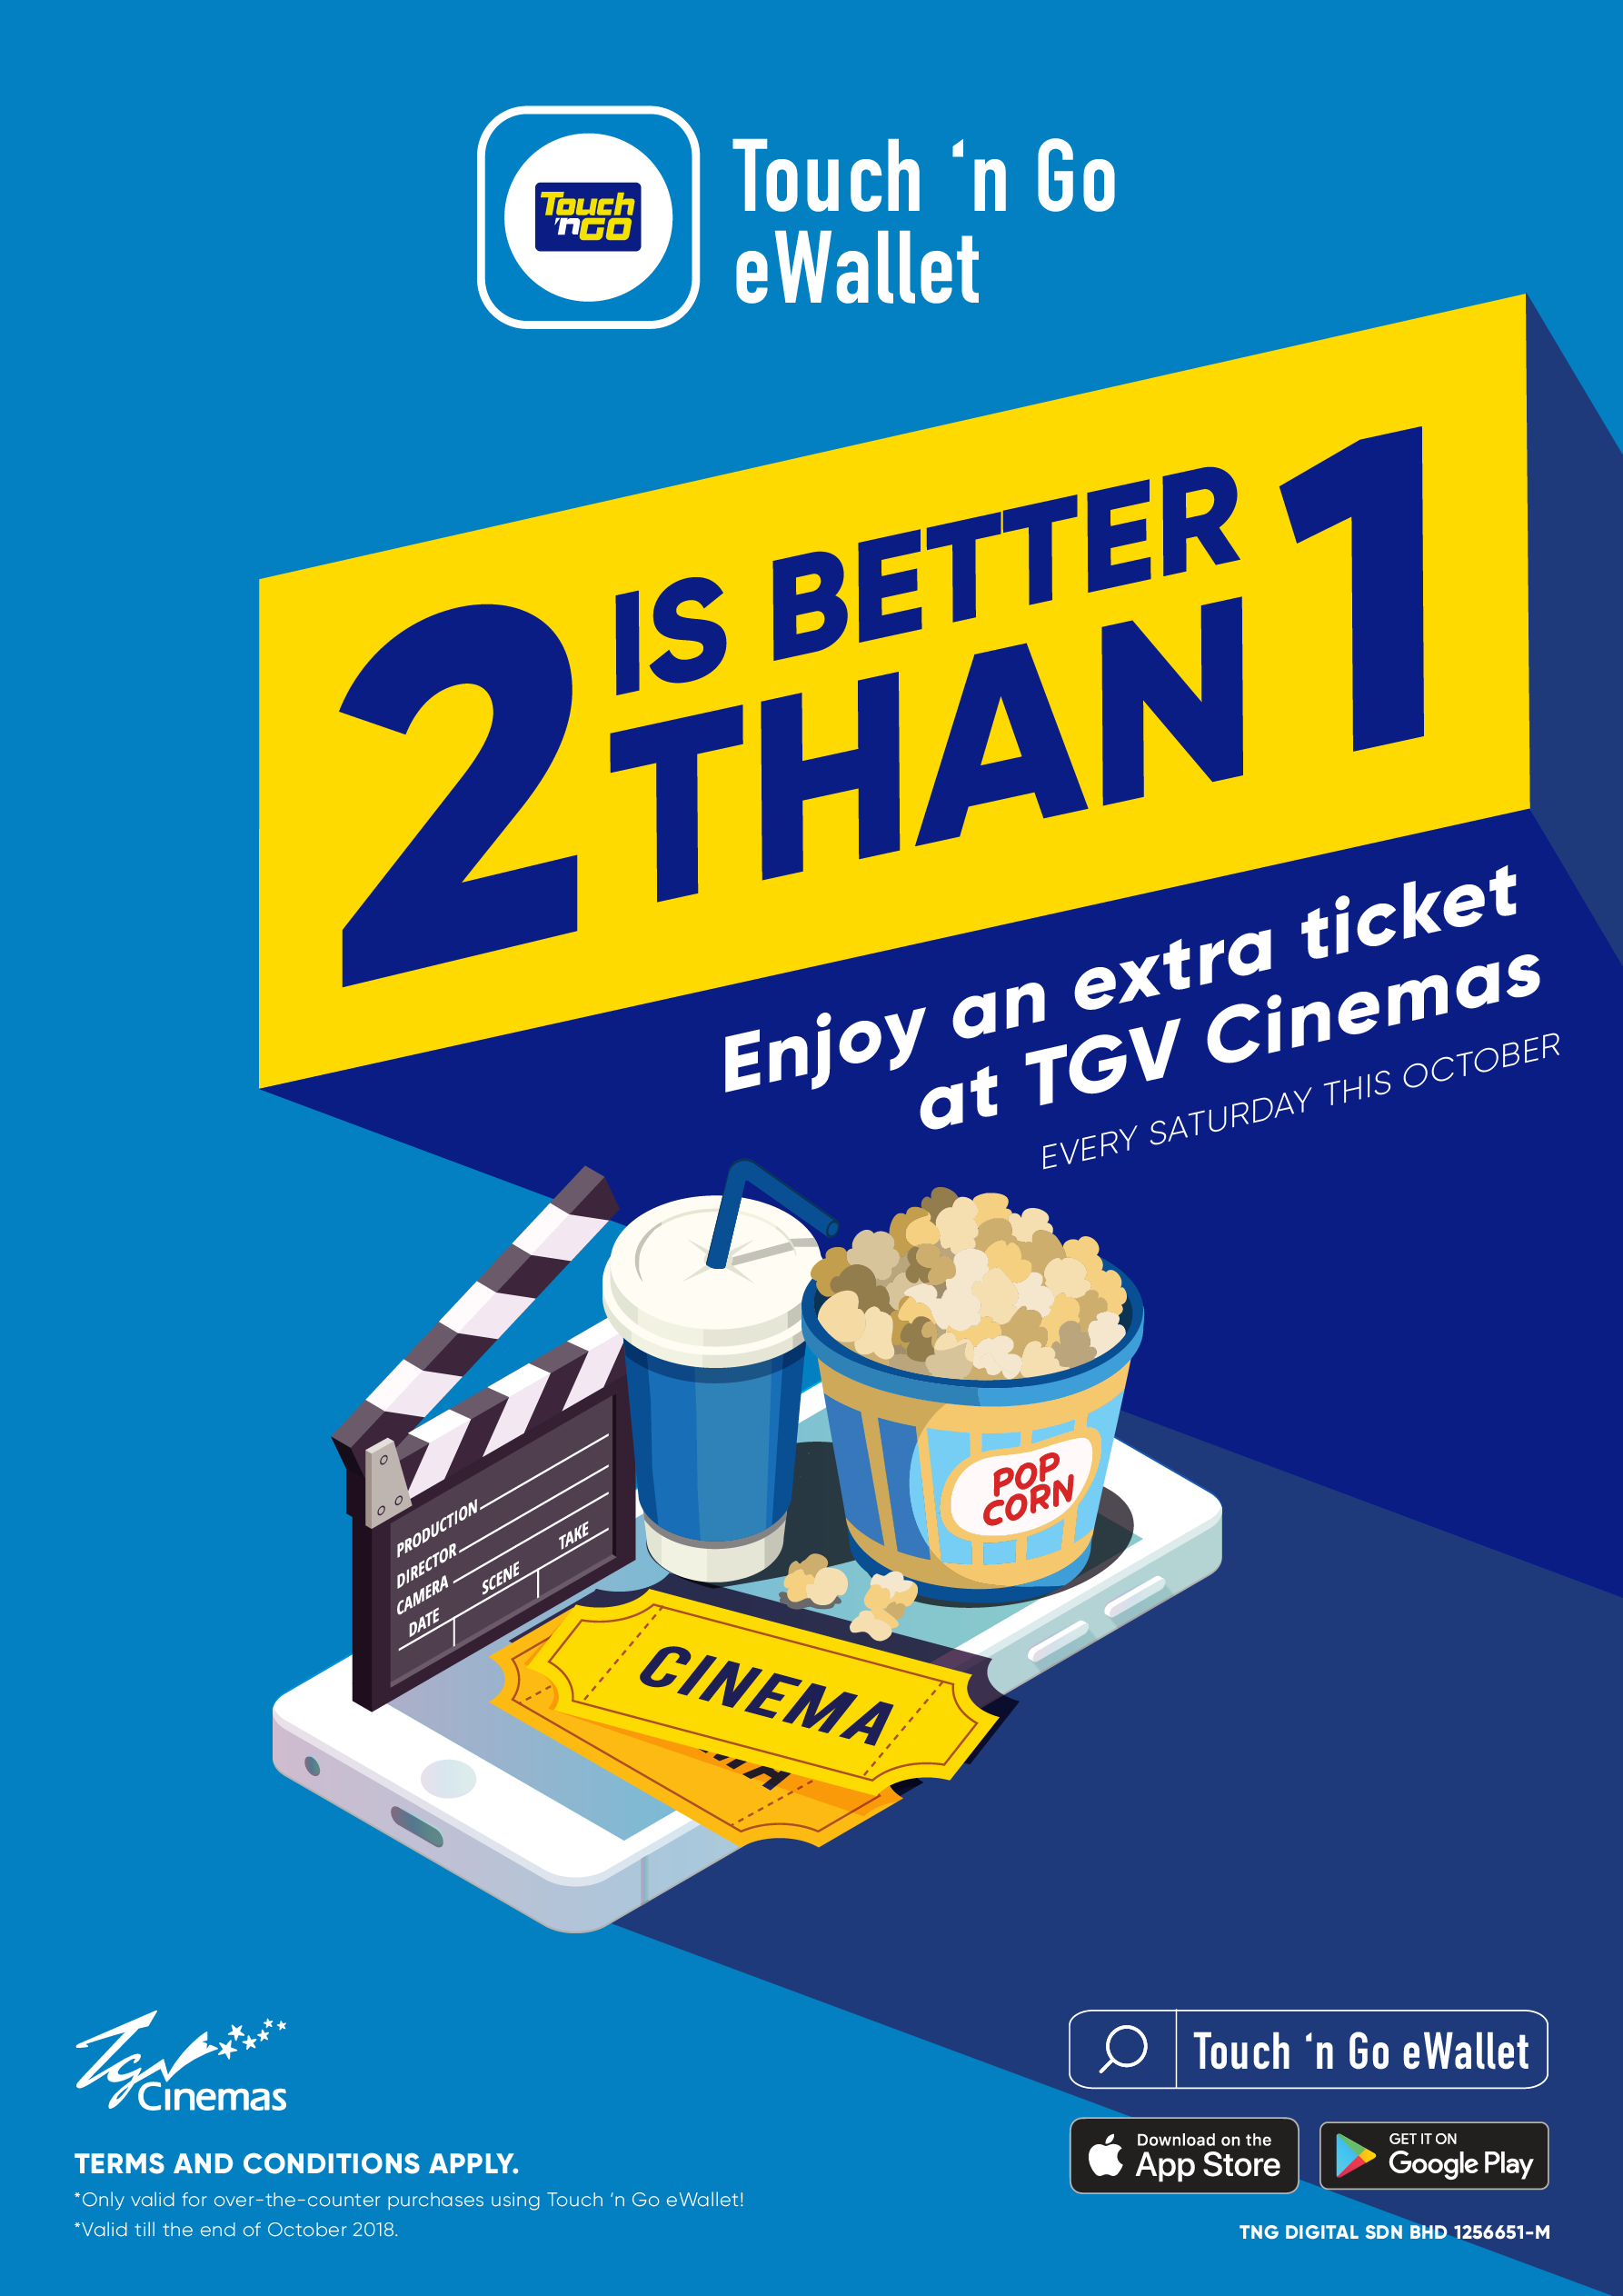 You Can Enjoy Buy 1 Free 1 TGV Movie Tickets Every Saturday - WORLD OF BUZZ